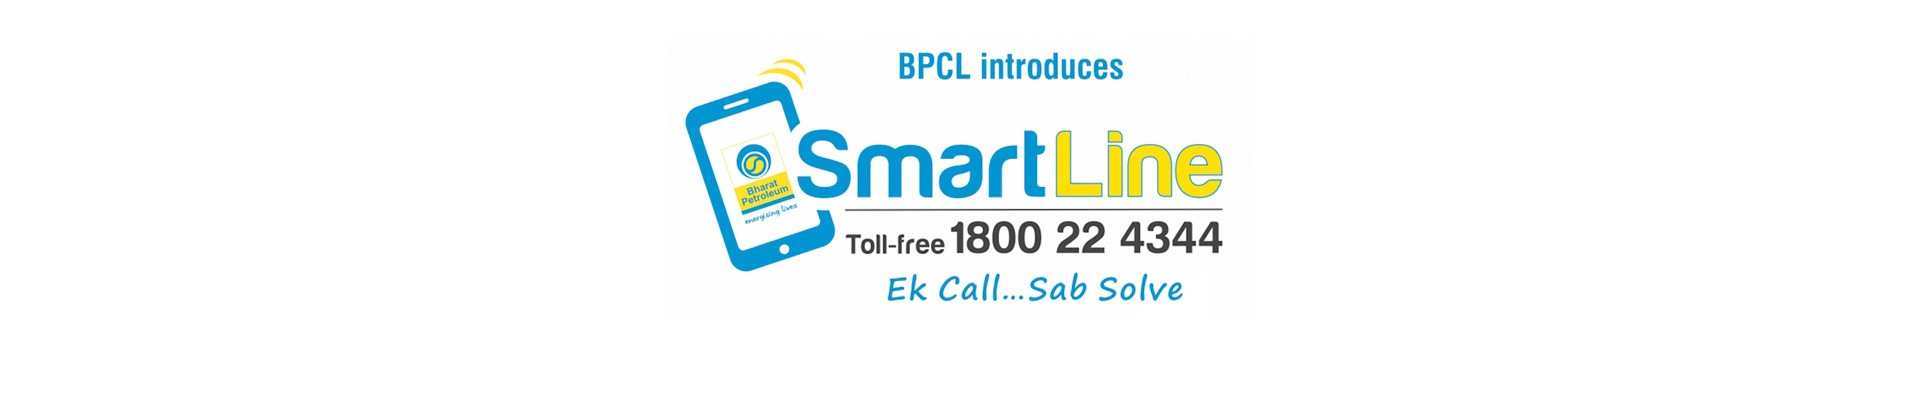 BPCL Smartline